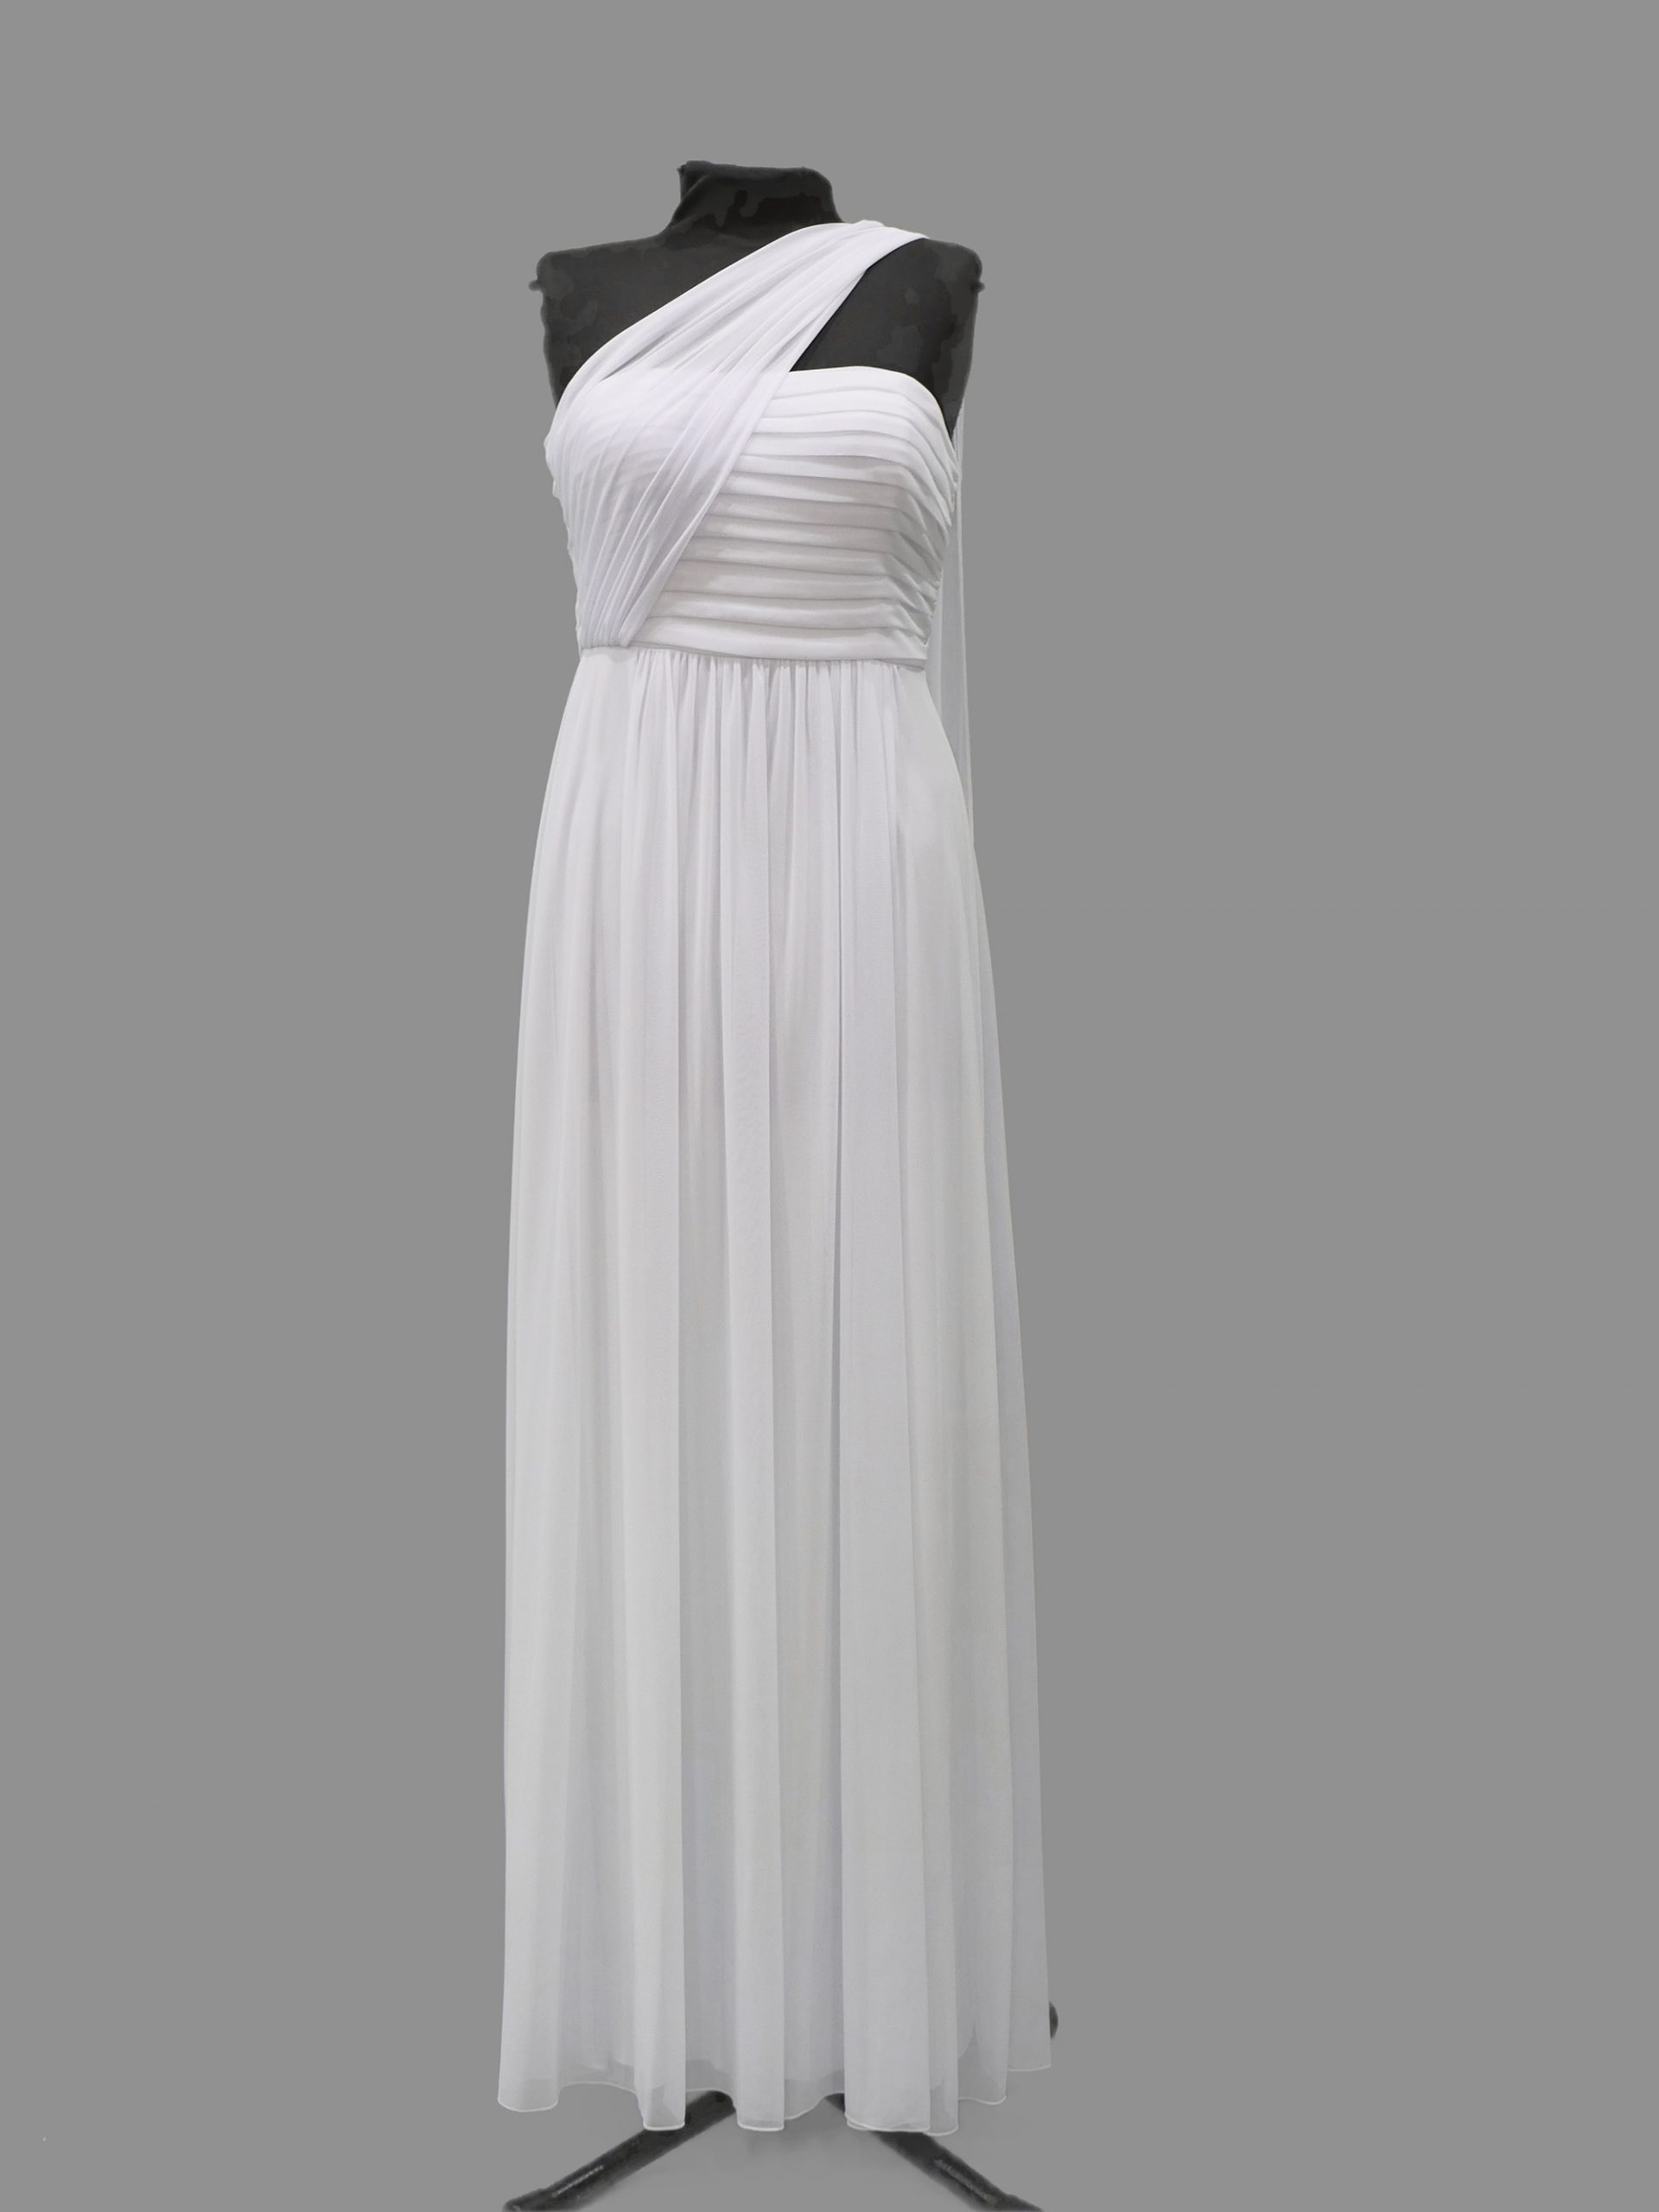 Simple Bridal or Debutante Gown, Mr K, KB5224, size 10, Australian Made